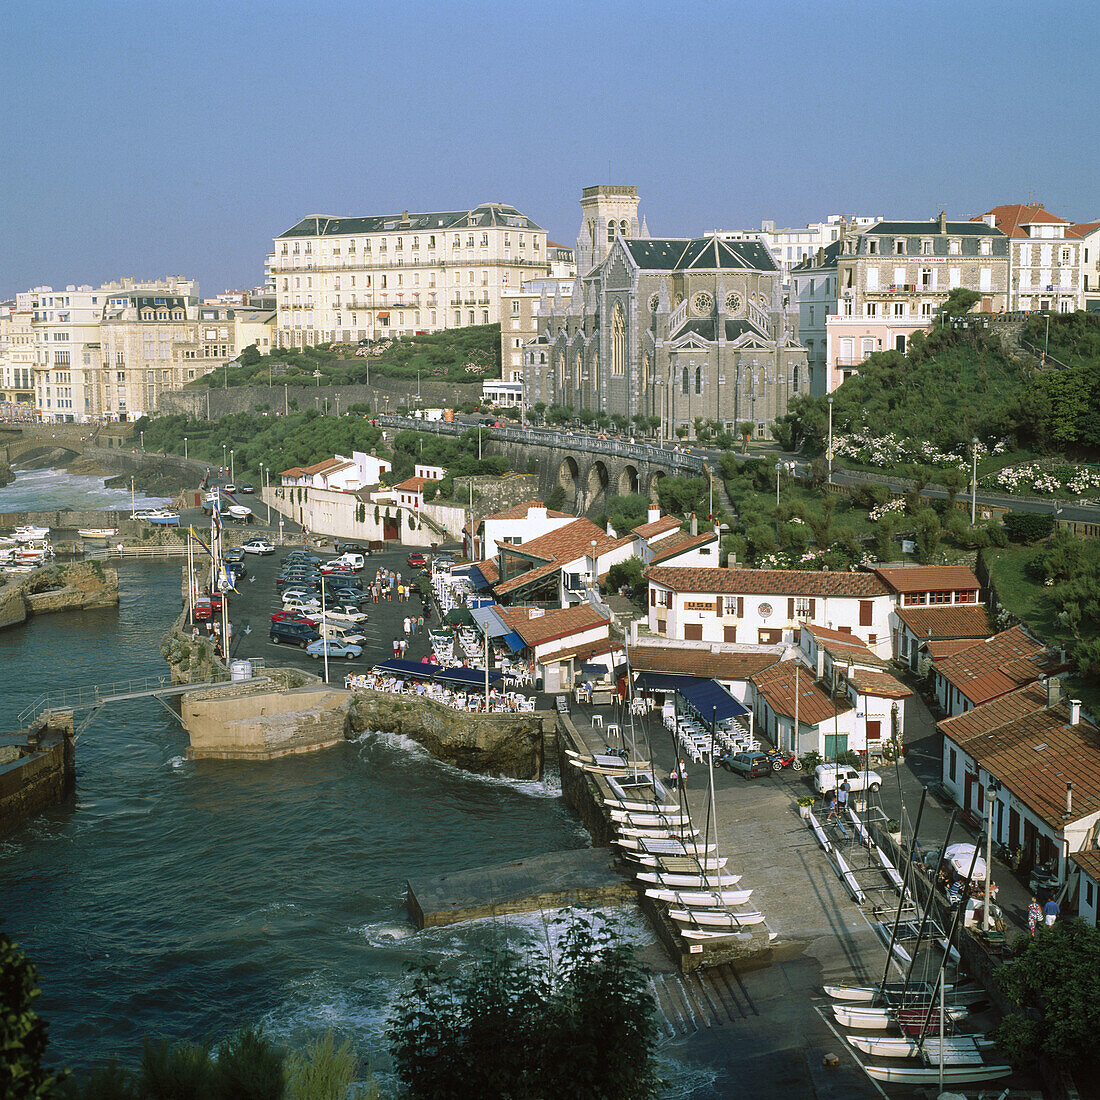 Fishing port, Biarritz, Pyrenees-Atlantiques dept., France